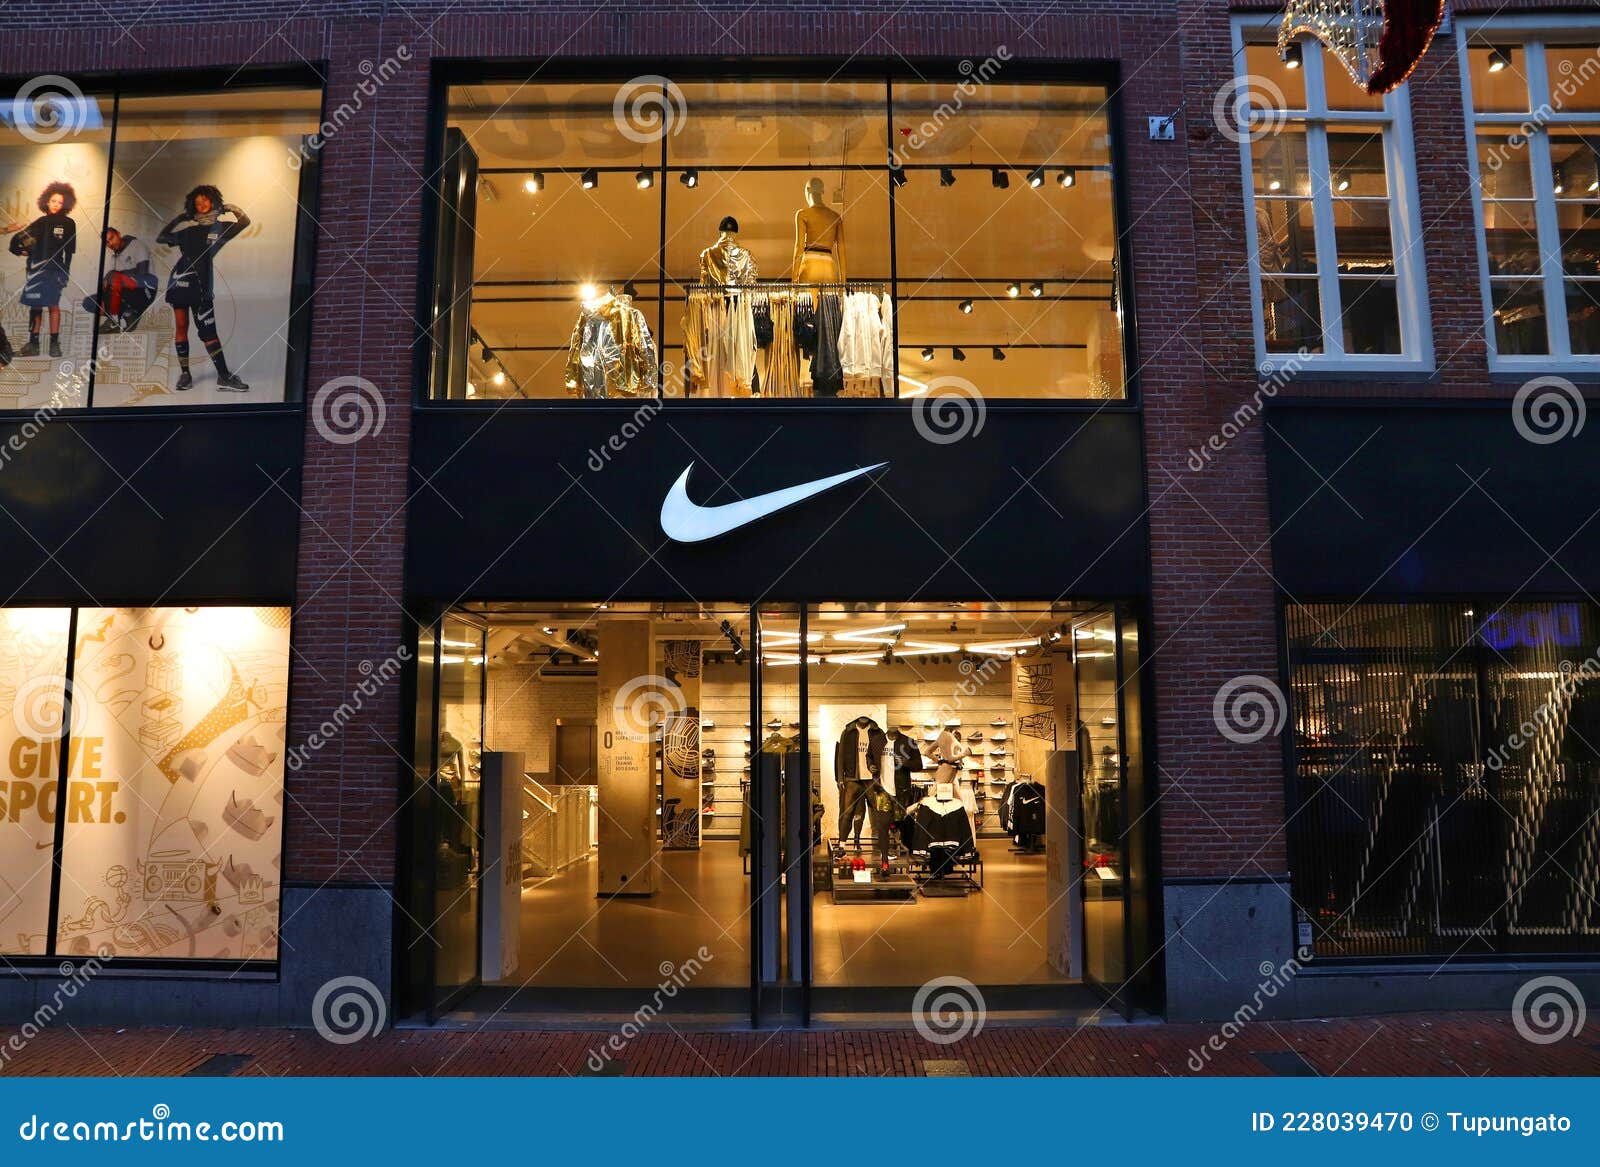 Nike Sports Fashion Store in Europe Editorial - Image destination, european: 228039470